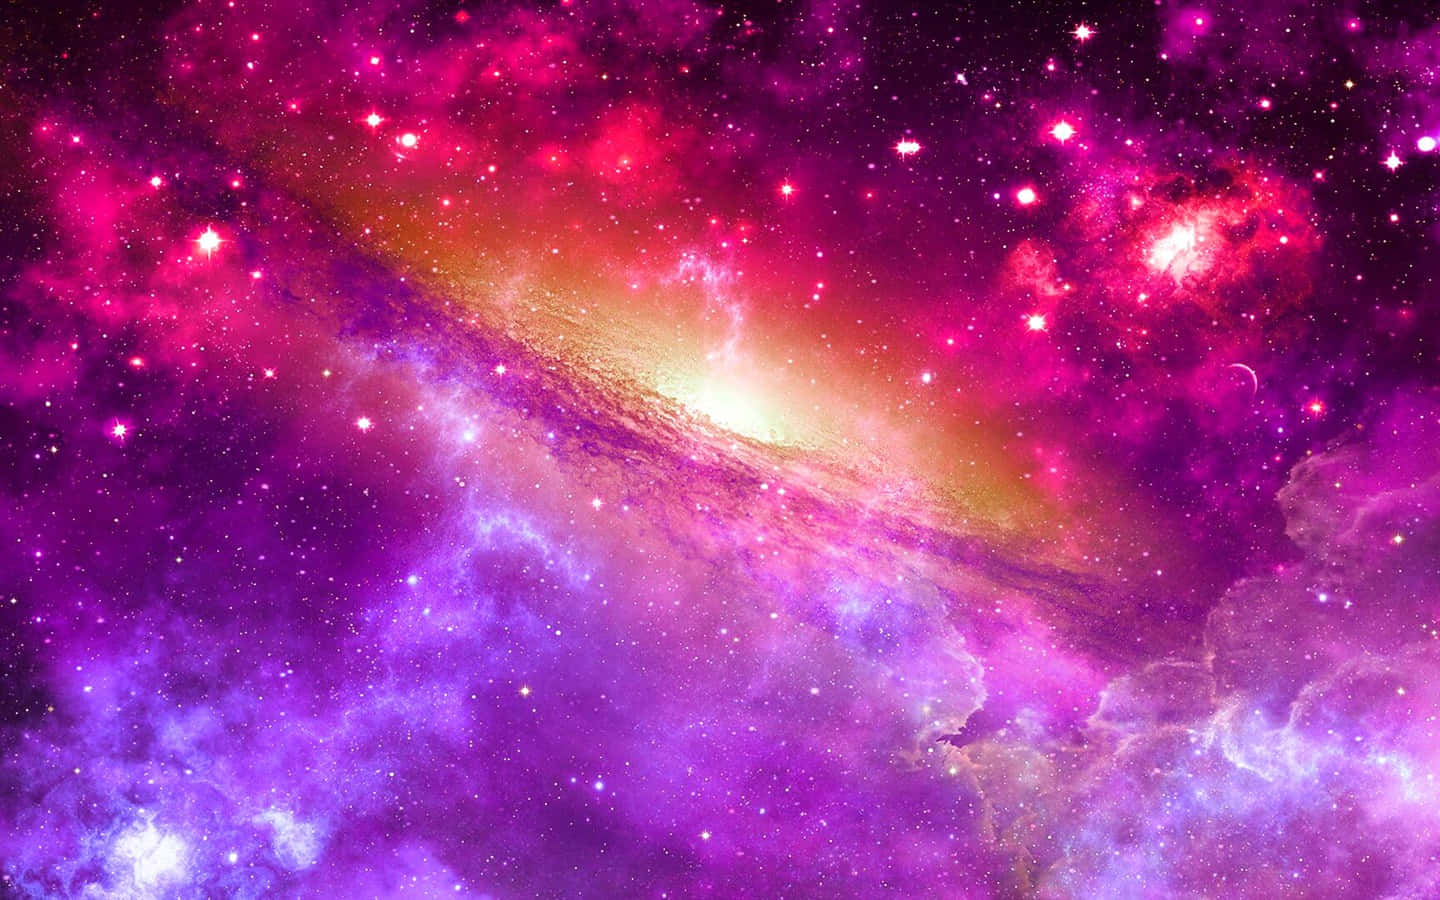 A vivid blue and purple nebula in the night sky